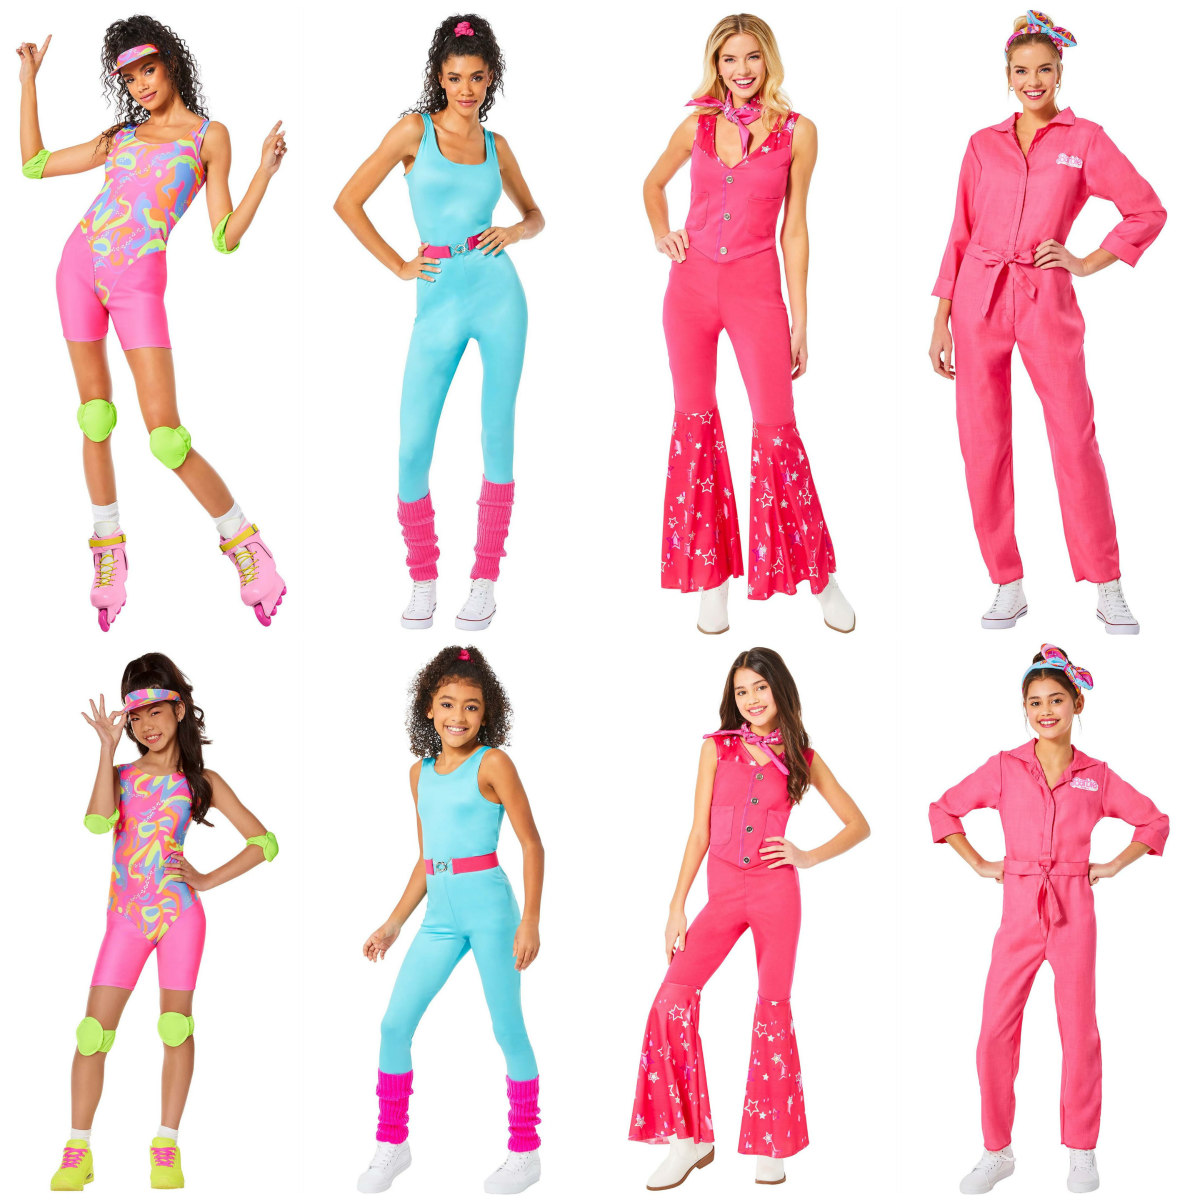 Barbie Costume Ideas: Let's Go Party! [Costume Guide] - HalloweenCostumes.com Blog